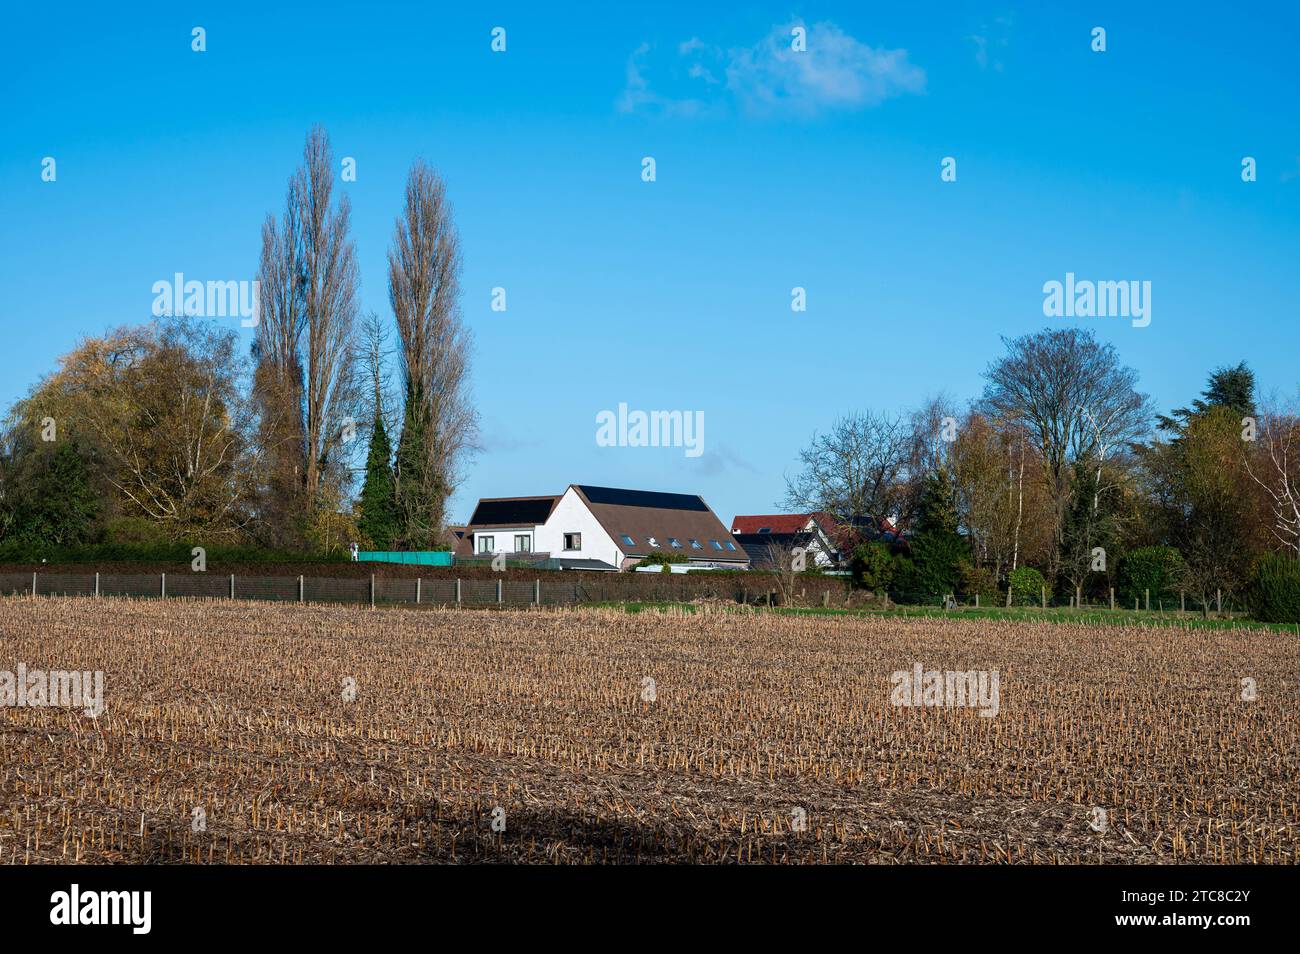 Harvested corn field and farmhouse against blue sky around Meise, Flemish Brabant Region, Belgium Credit: Imago/Alamy Live News Stock Photo